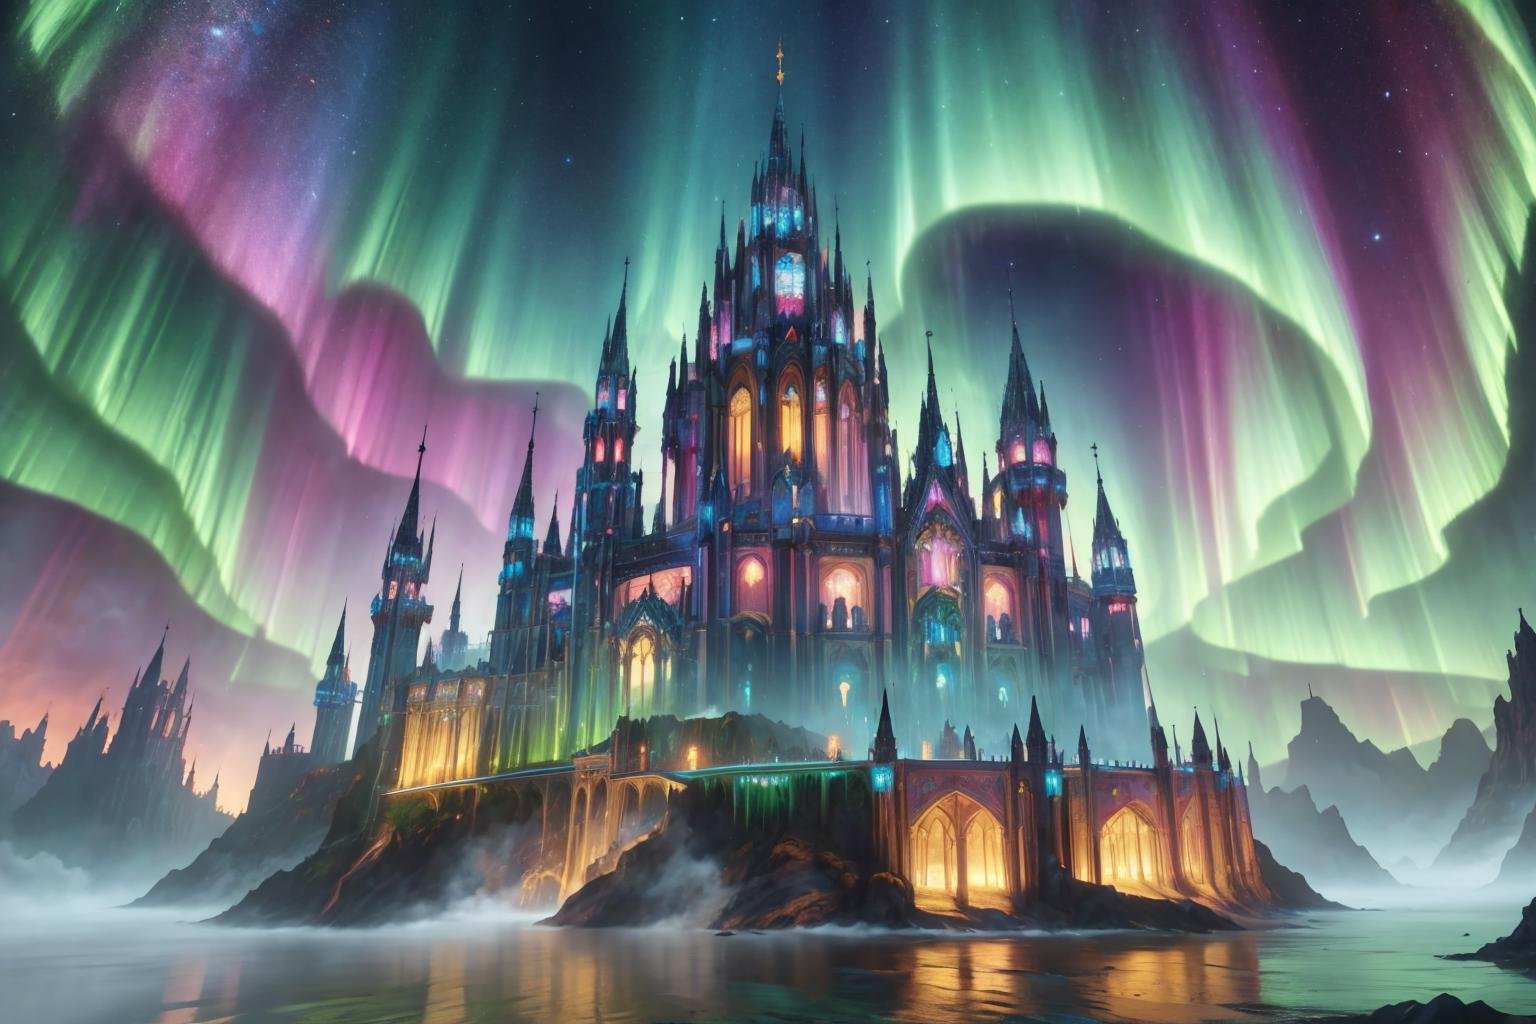 masterpiece, best quality, <lora:aurora-style-richy-v1:1> aurorastyle, fantasy, castle